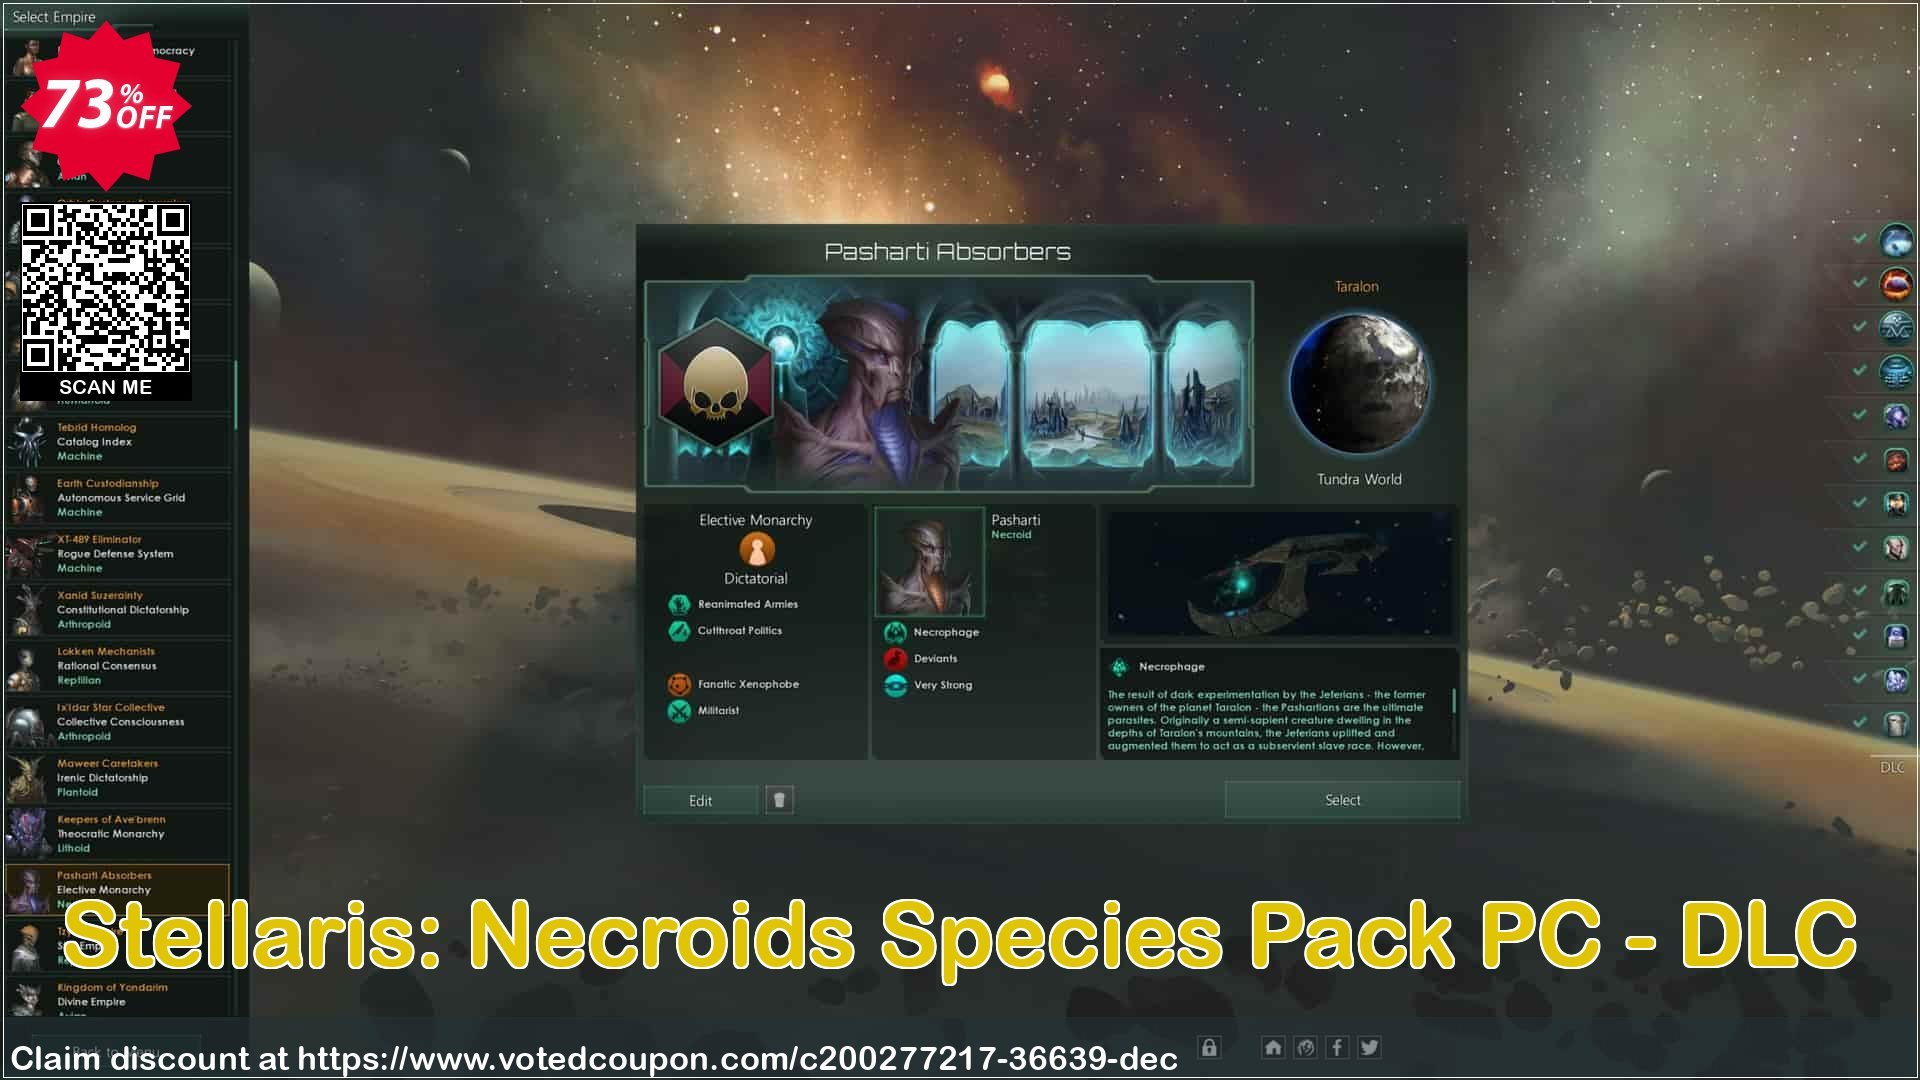 Stellaris: Necroids Species Pack PC - DLC Coupon Code Apr 2024, 73% OFF - VotedCoupon